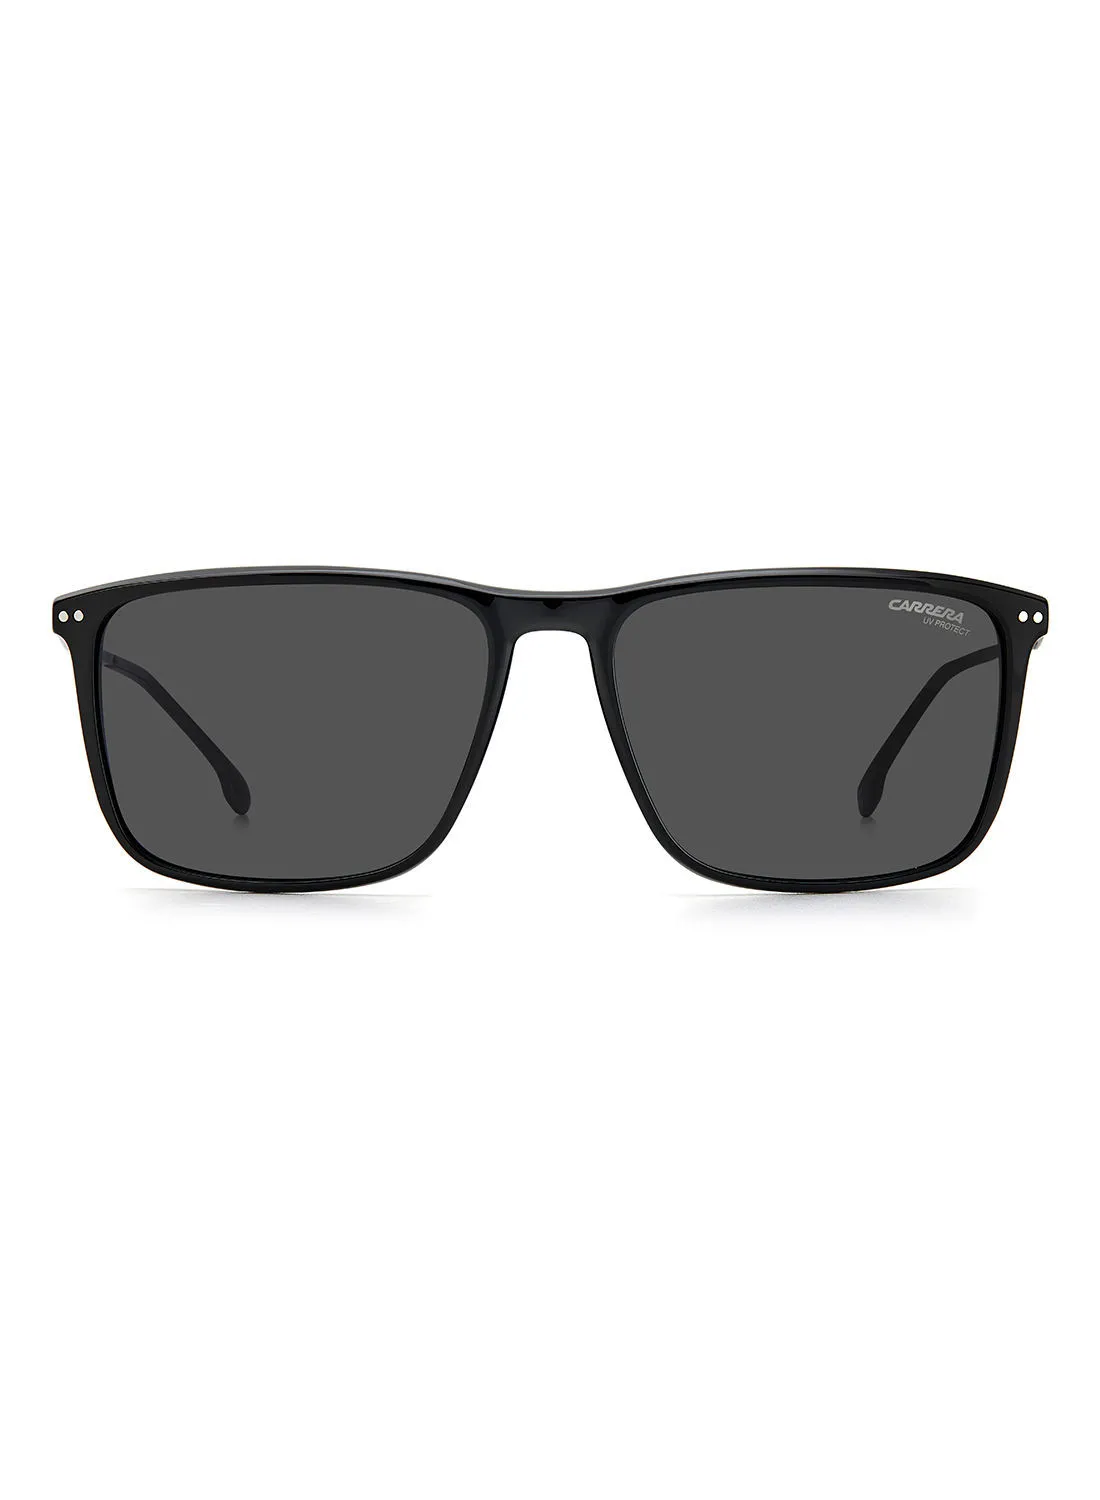 CARRERA Rectangular / Square Sunglasses CARRERA 8049/S  BLACK 58